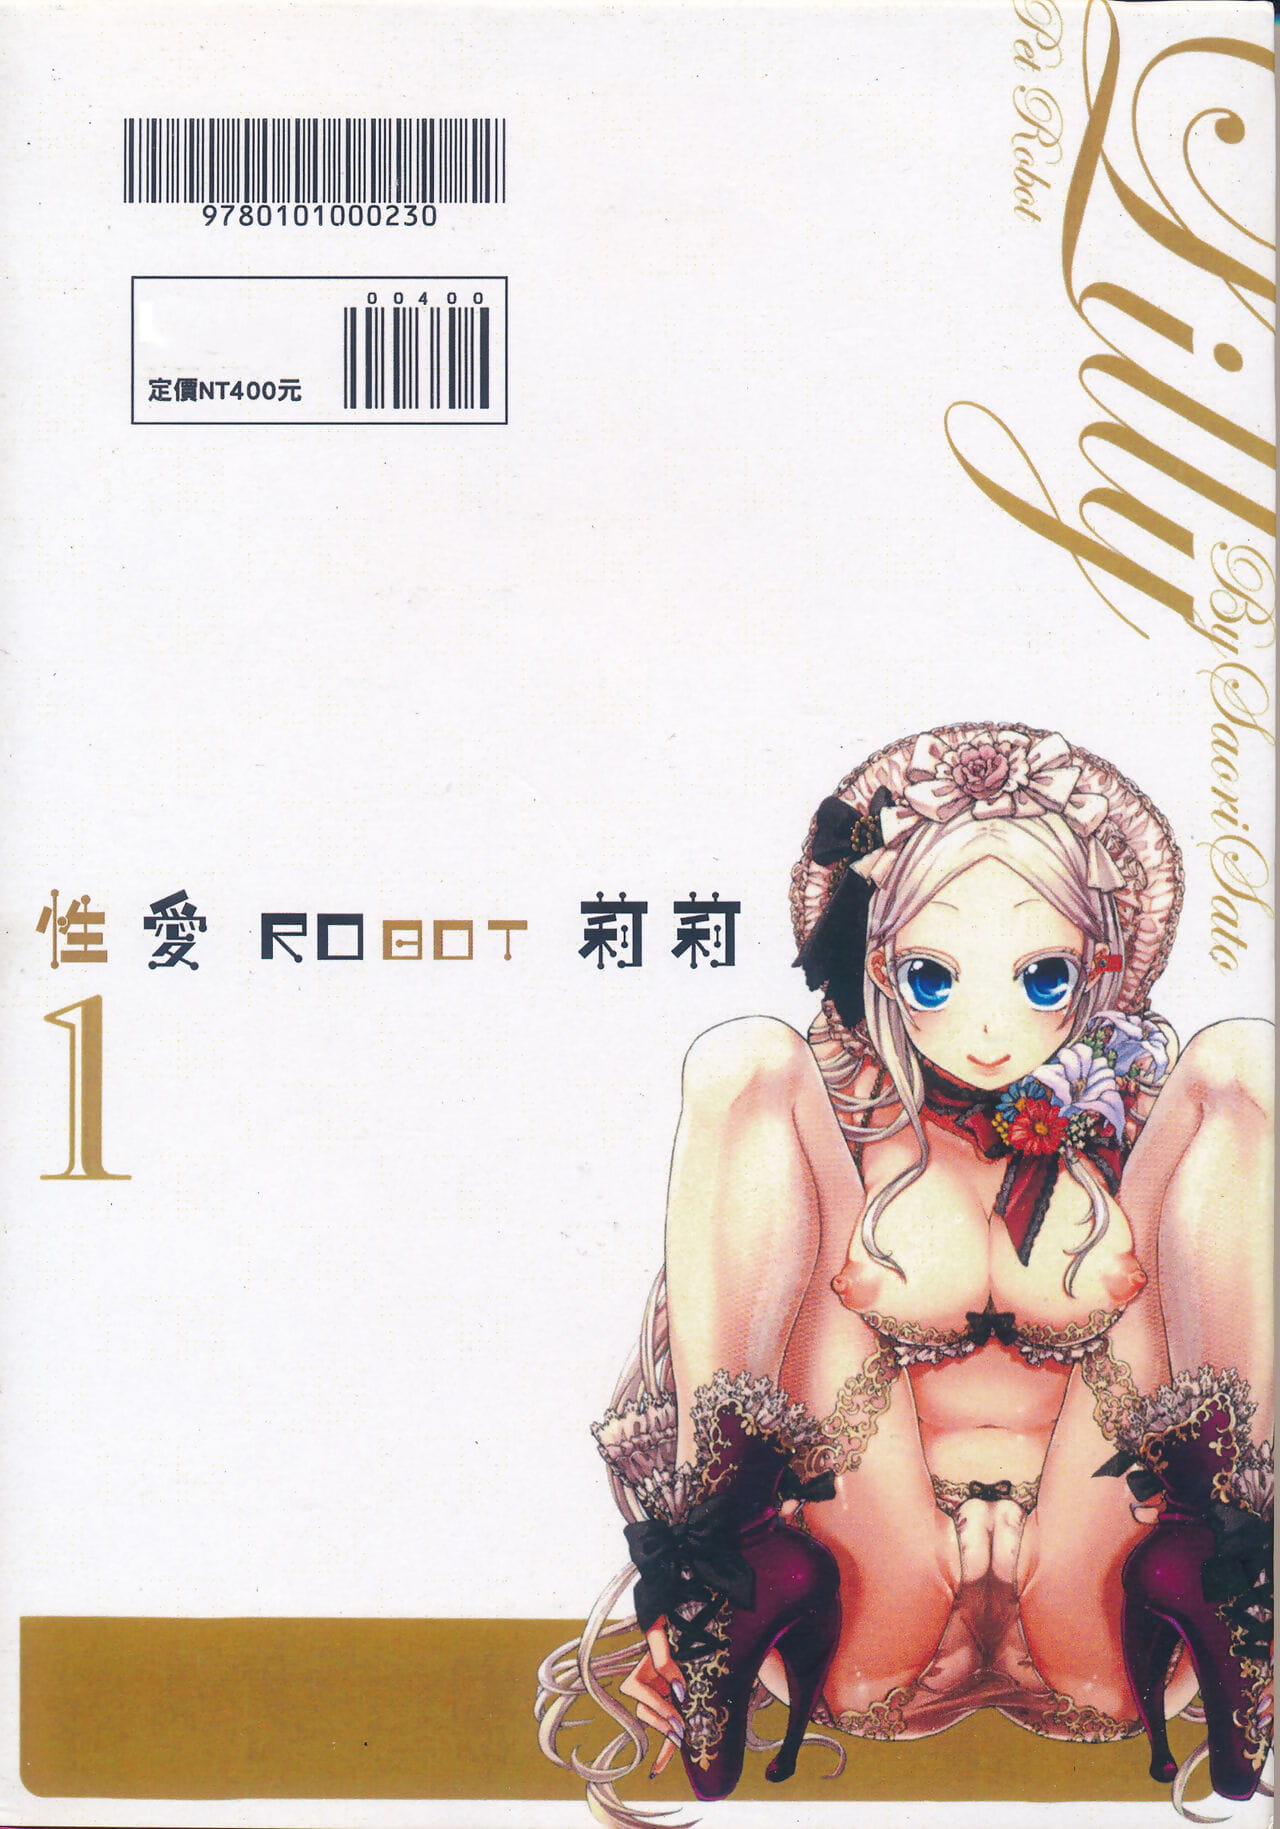 Satou ساوري ايجان الروبوت ليلي الحيوانات الأليفة الروبوت ليلي vol. 1 性愛robot 莉莉 vol. 1 الصينية جزء 7